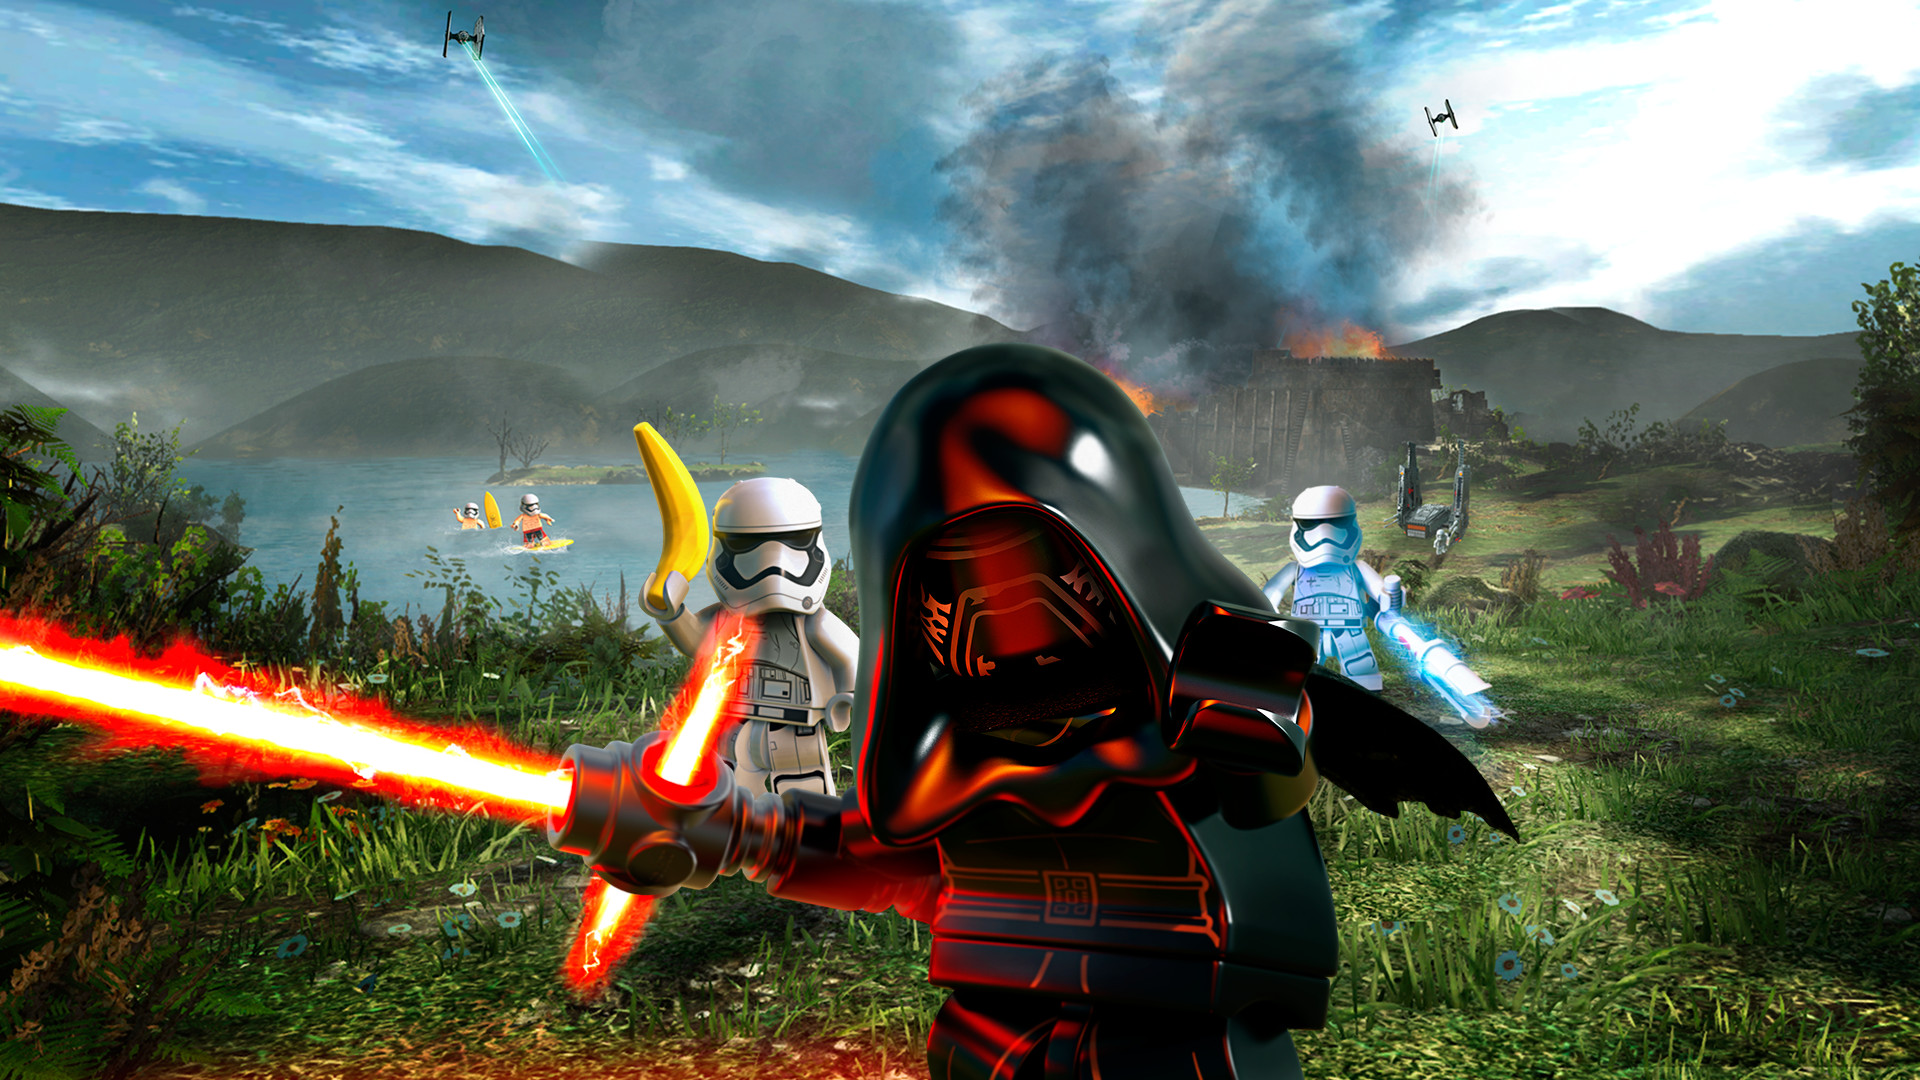 LEGO Star Wars: The Force Awakens - First Order Siege of Takodana Level Pack DLC Steam CD Key $2.25